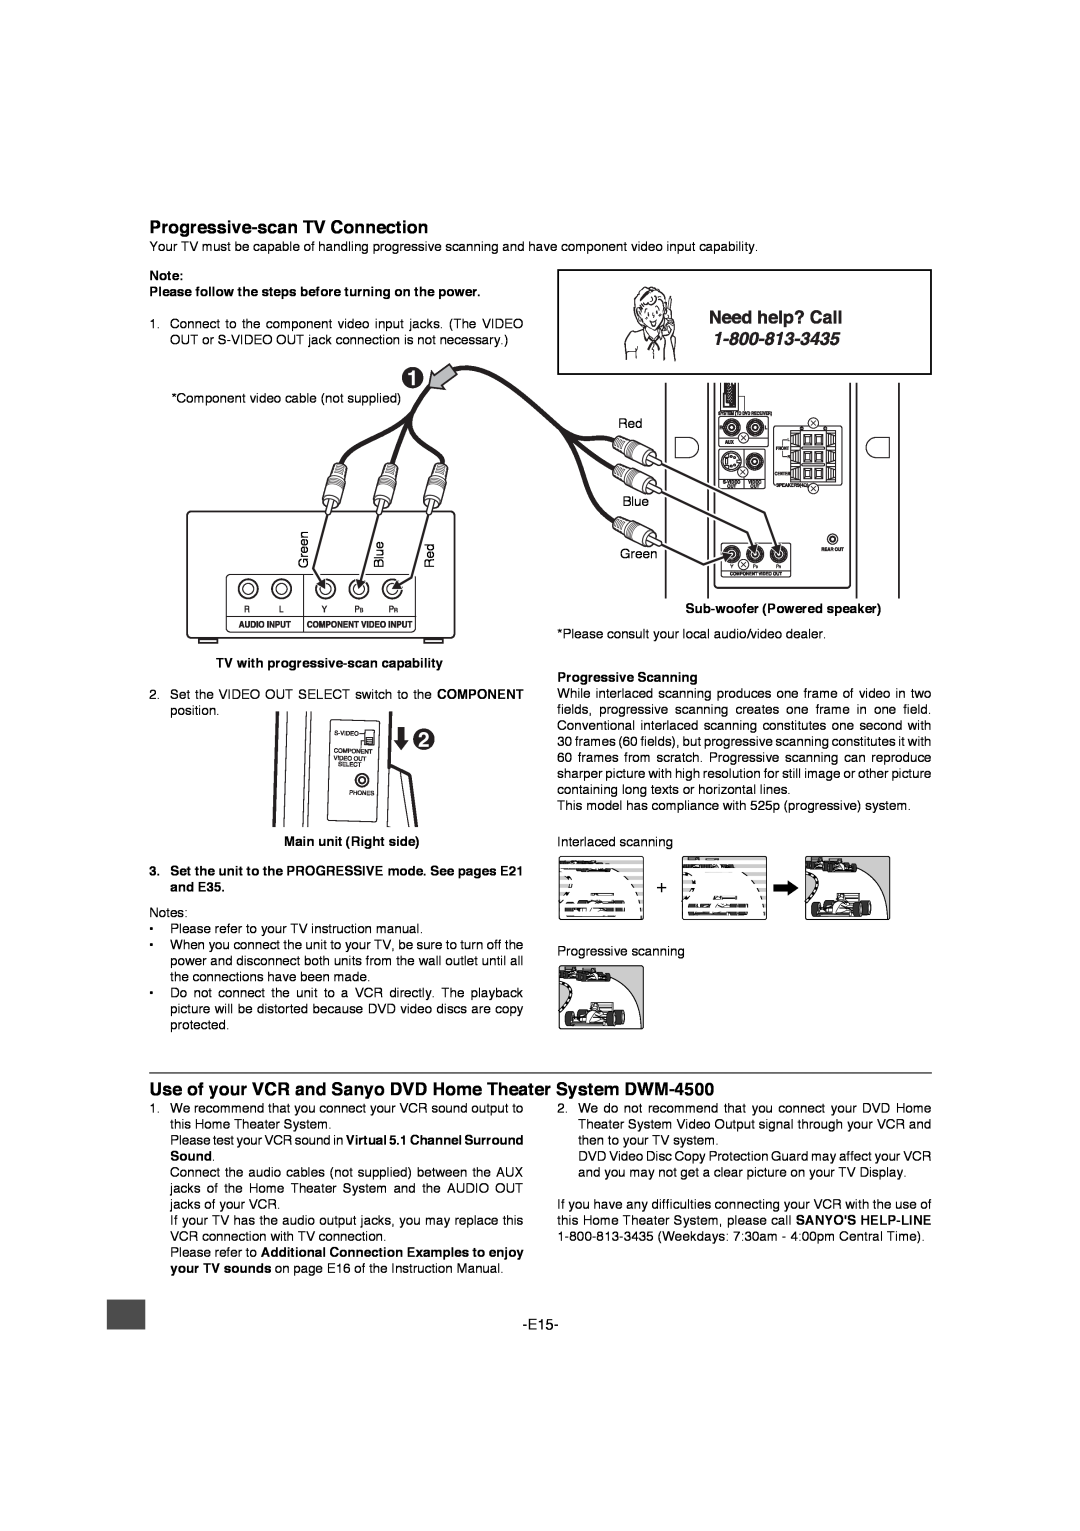 Sanyo DWM-4500 instruction manual Progressive-scanTV Connection, TV with progressive-scancapability, Main unit Right side 